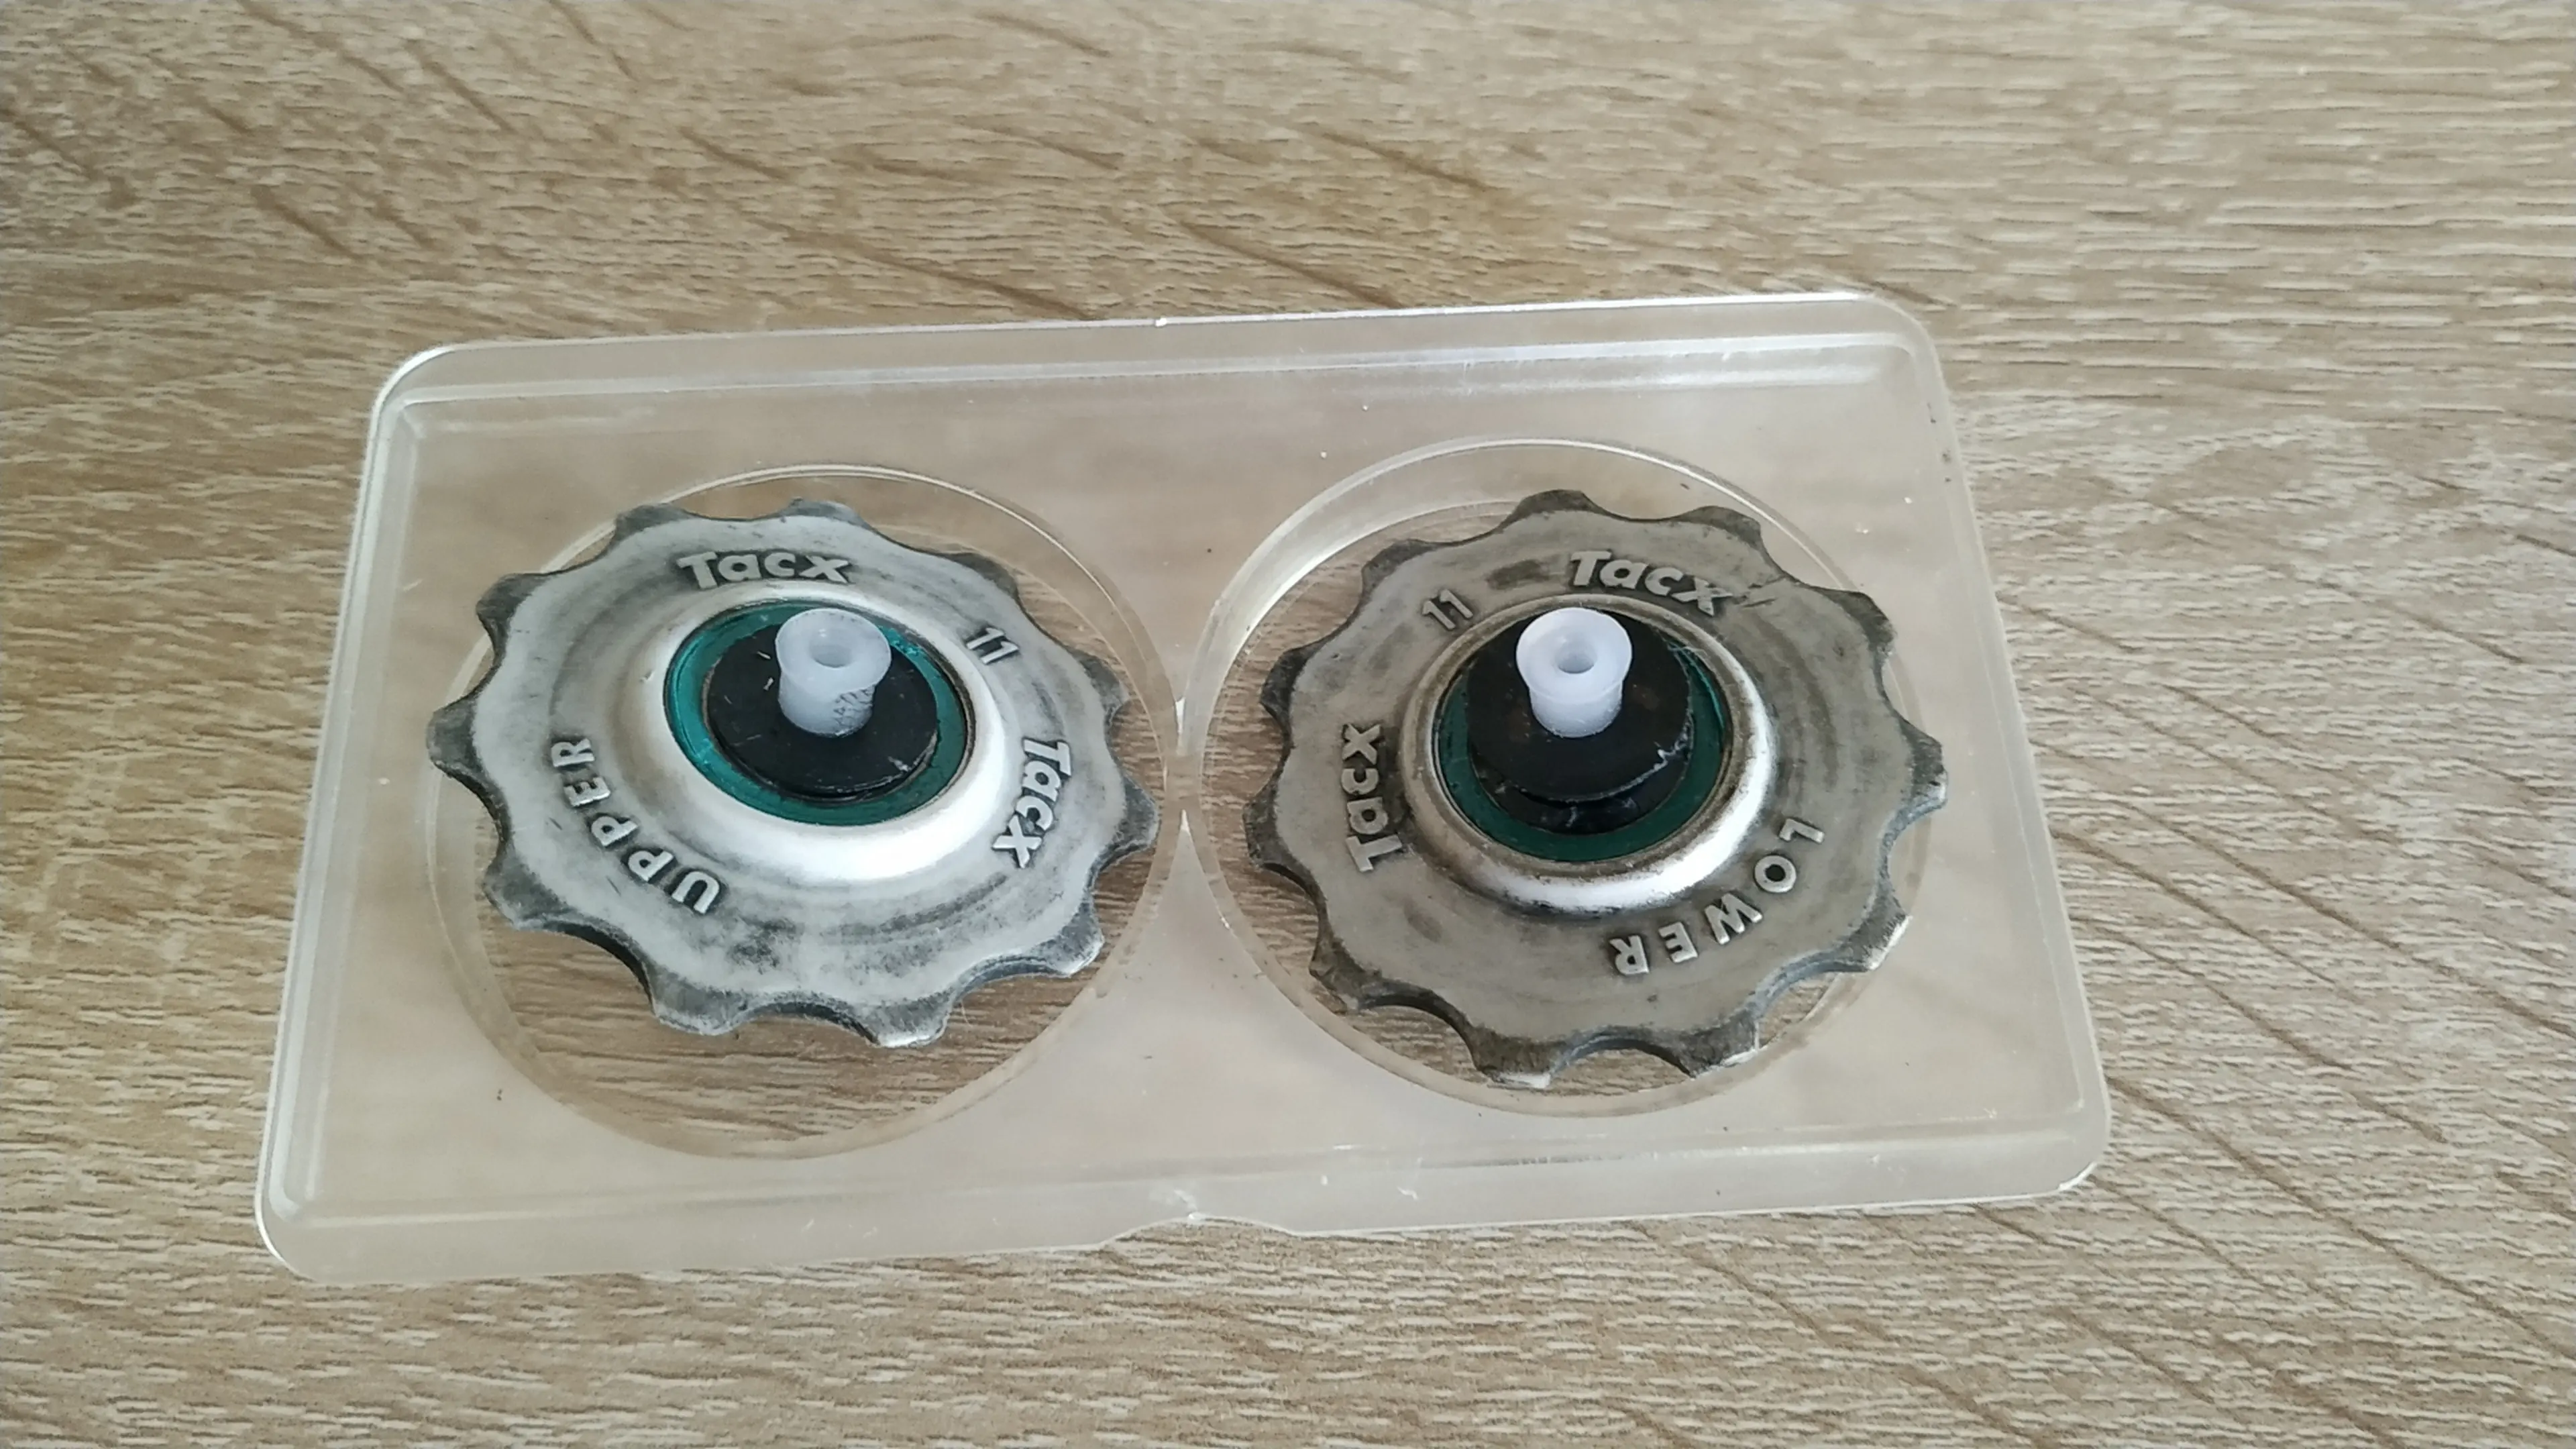 1. Rotite deraior/Jockey wheels ceramic ball bearings